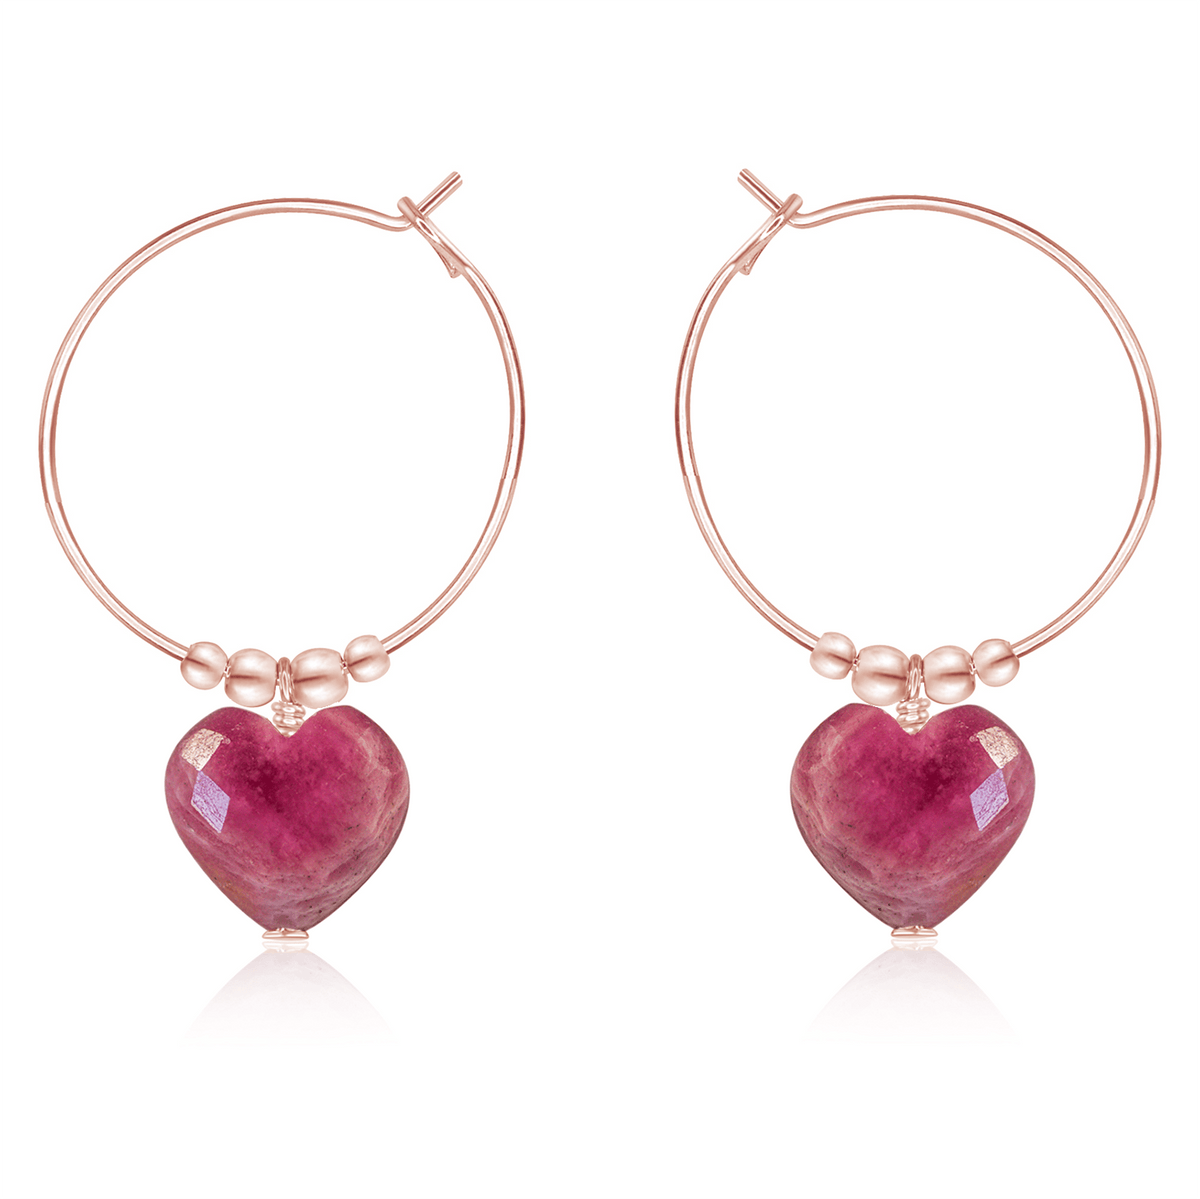 Ruby Crystal Heart Dangle Hoop Earrings - Ruby Crystal Heart Dangle Hoop Earrings - 14k Rose Gold Fill - Luna Tide Handmade Crystal Jewellery